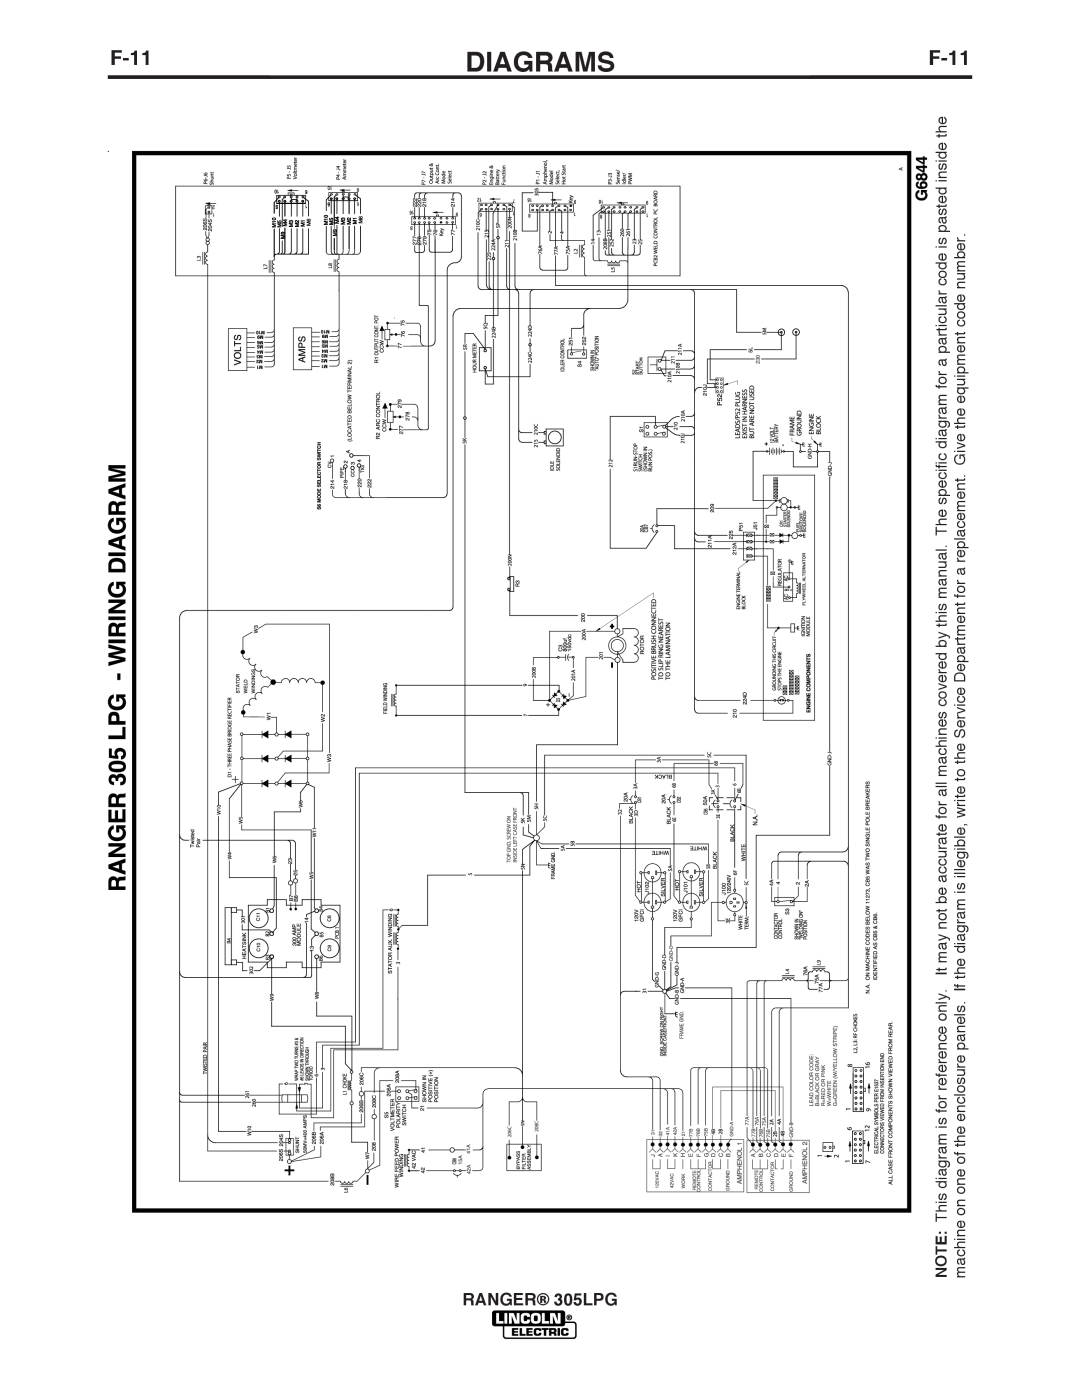 Lincoln Electric IM10043-A manual F-11, Diagrams, RANGER 305LPG 